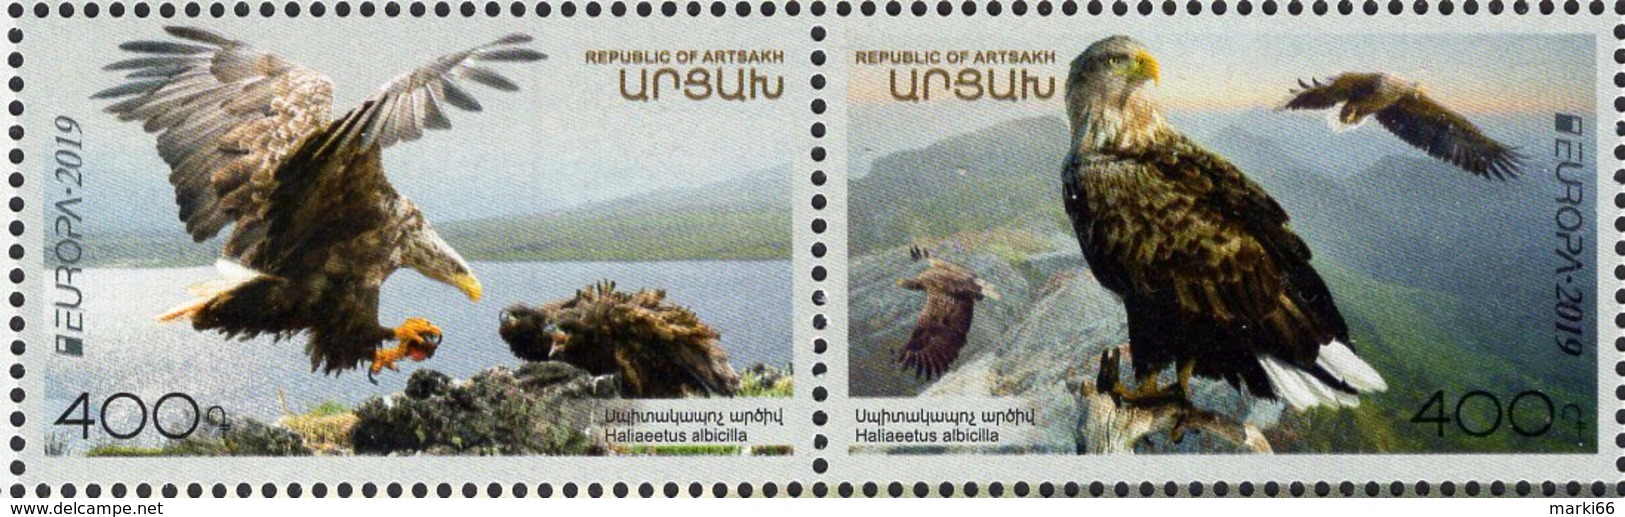 Armenia - Nagorno-Karabakh - 2019 - Europa CEPT - National Birds - Mint Stamp Set - Armenia